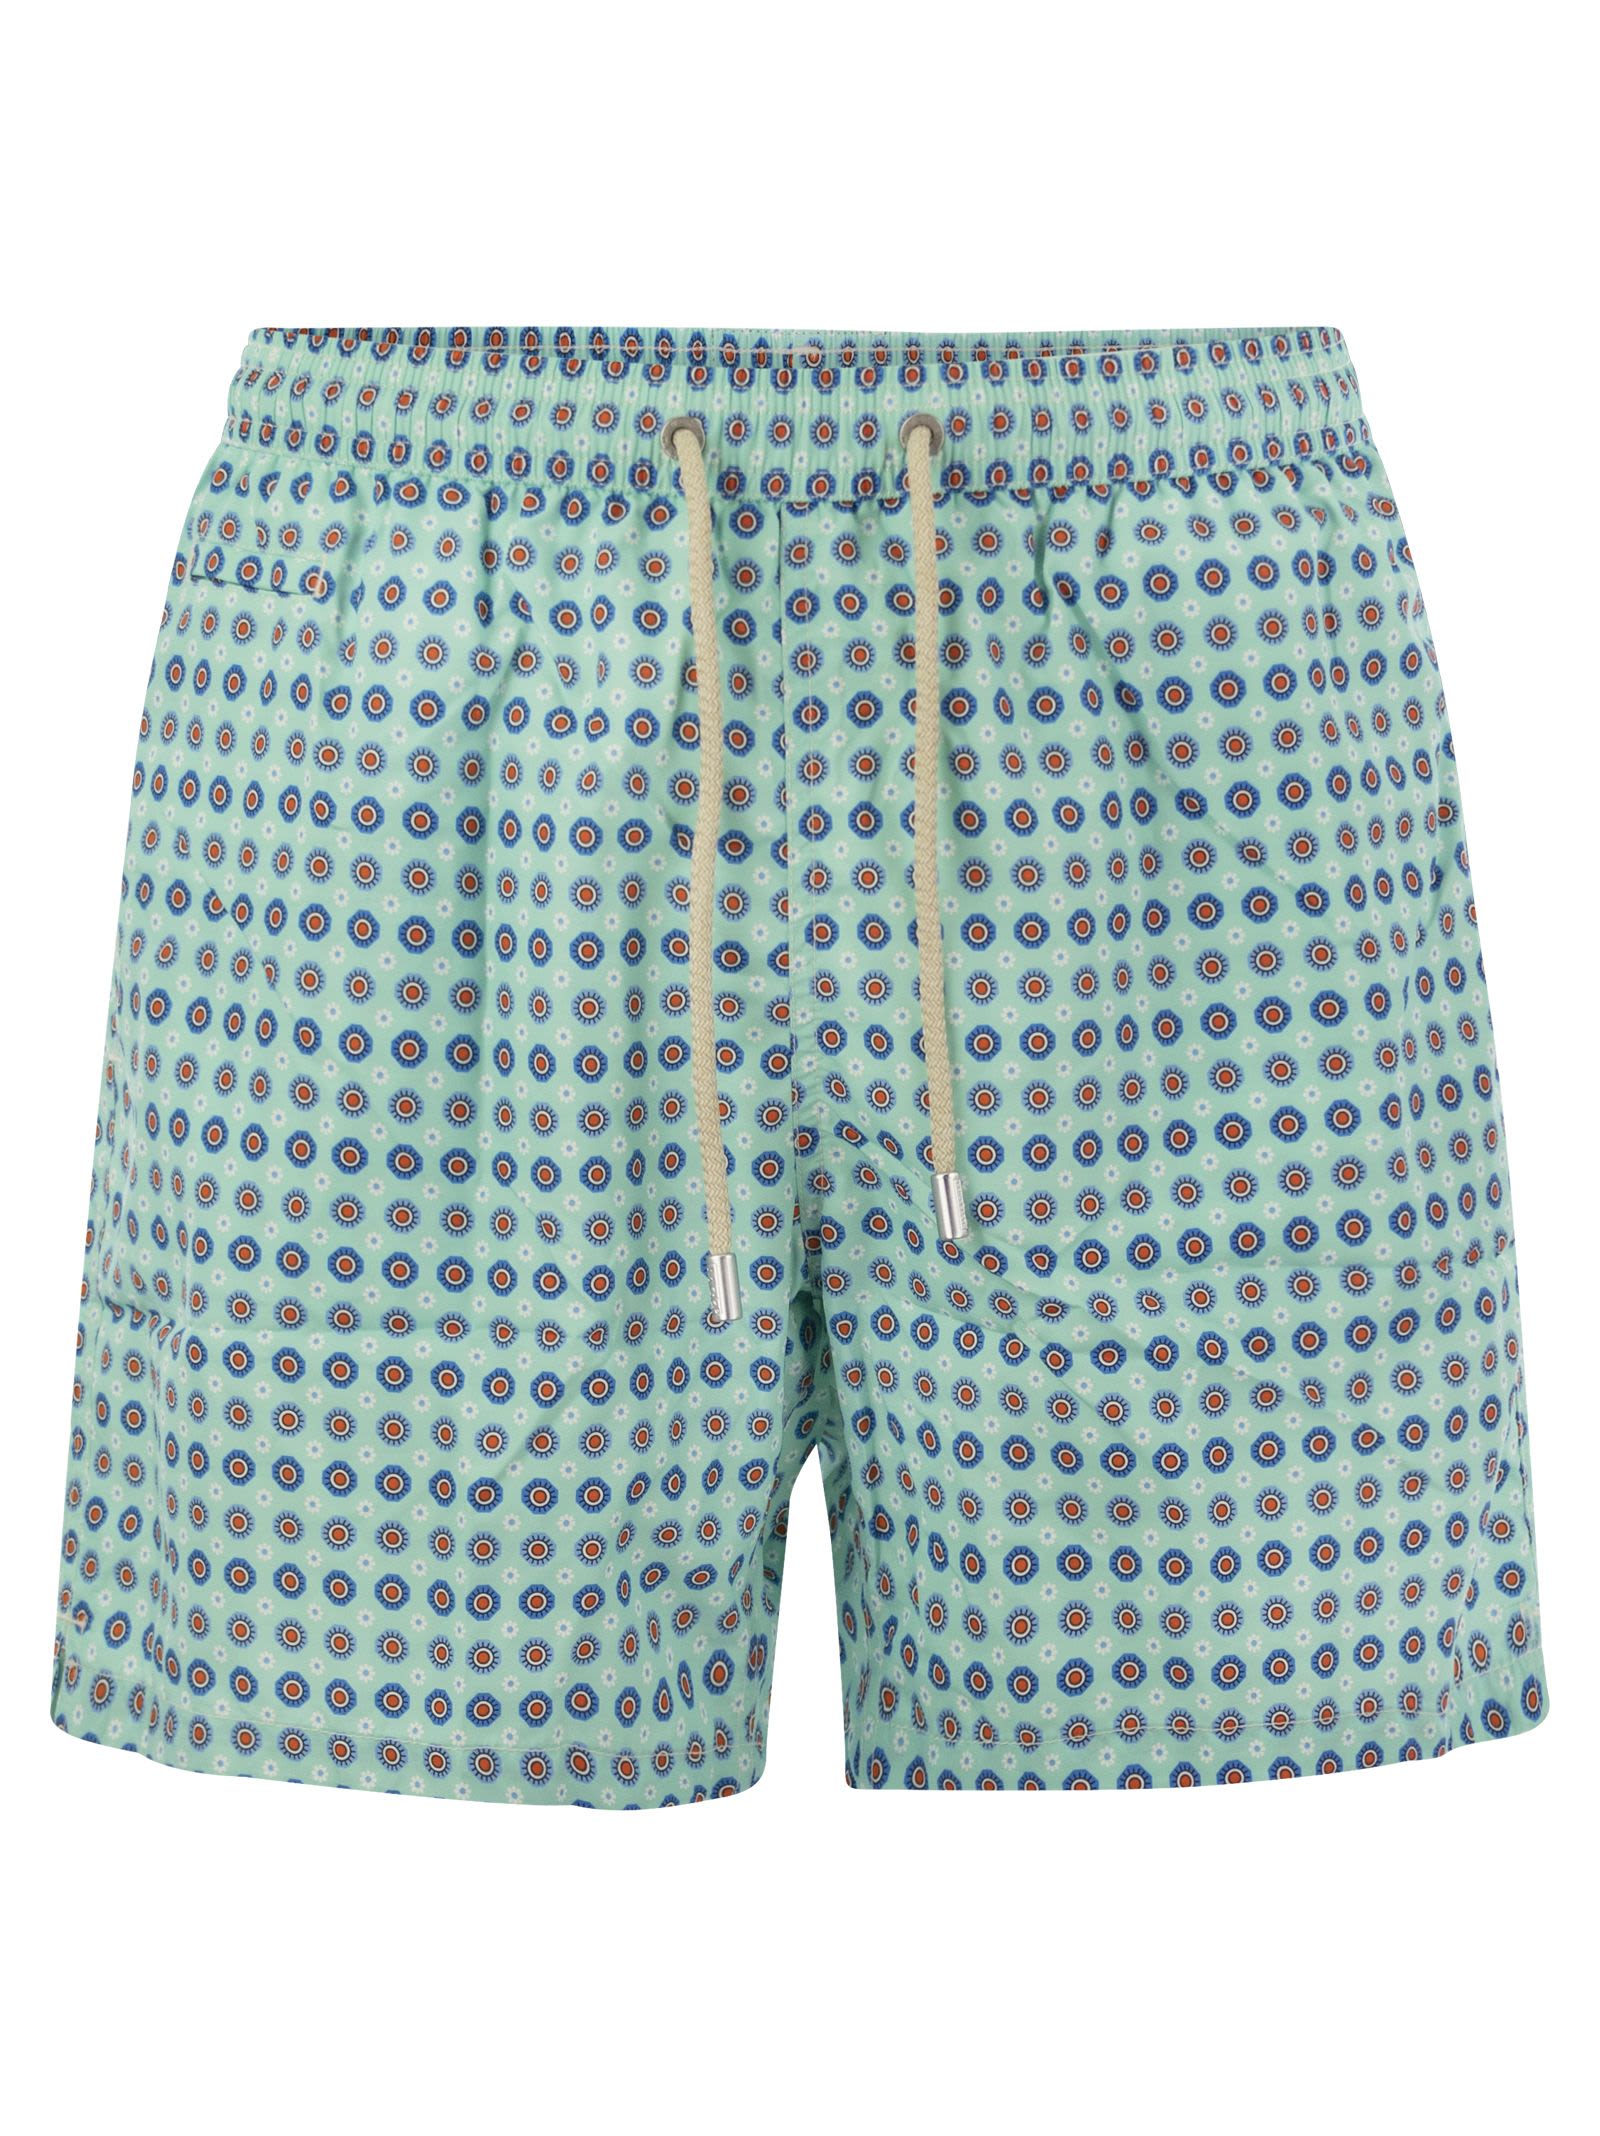 Lightweight Fabric Swim Boxer Shorts With Print